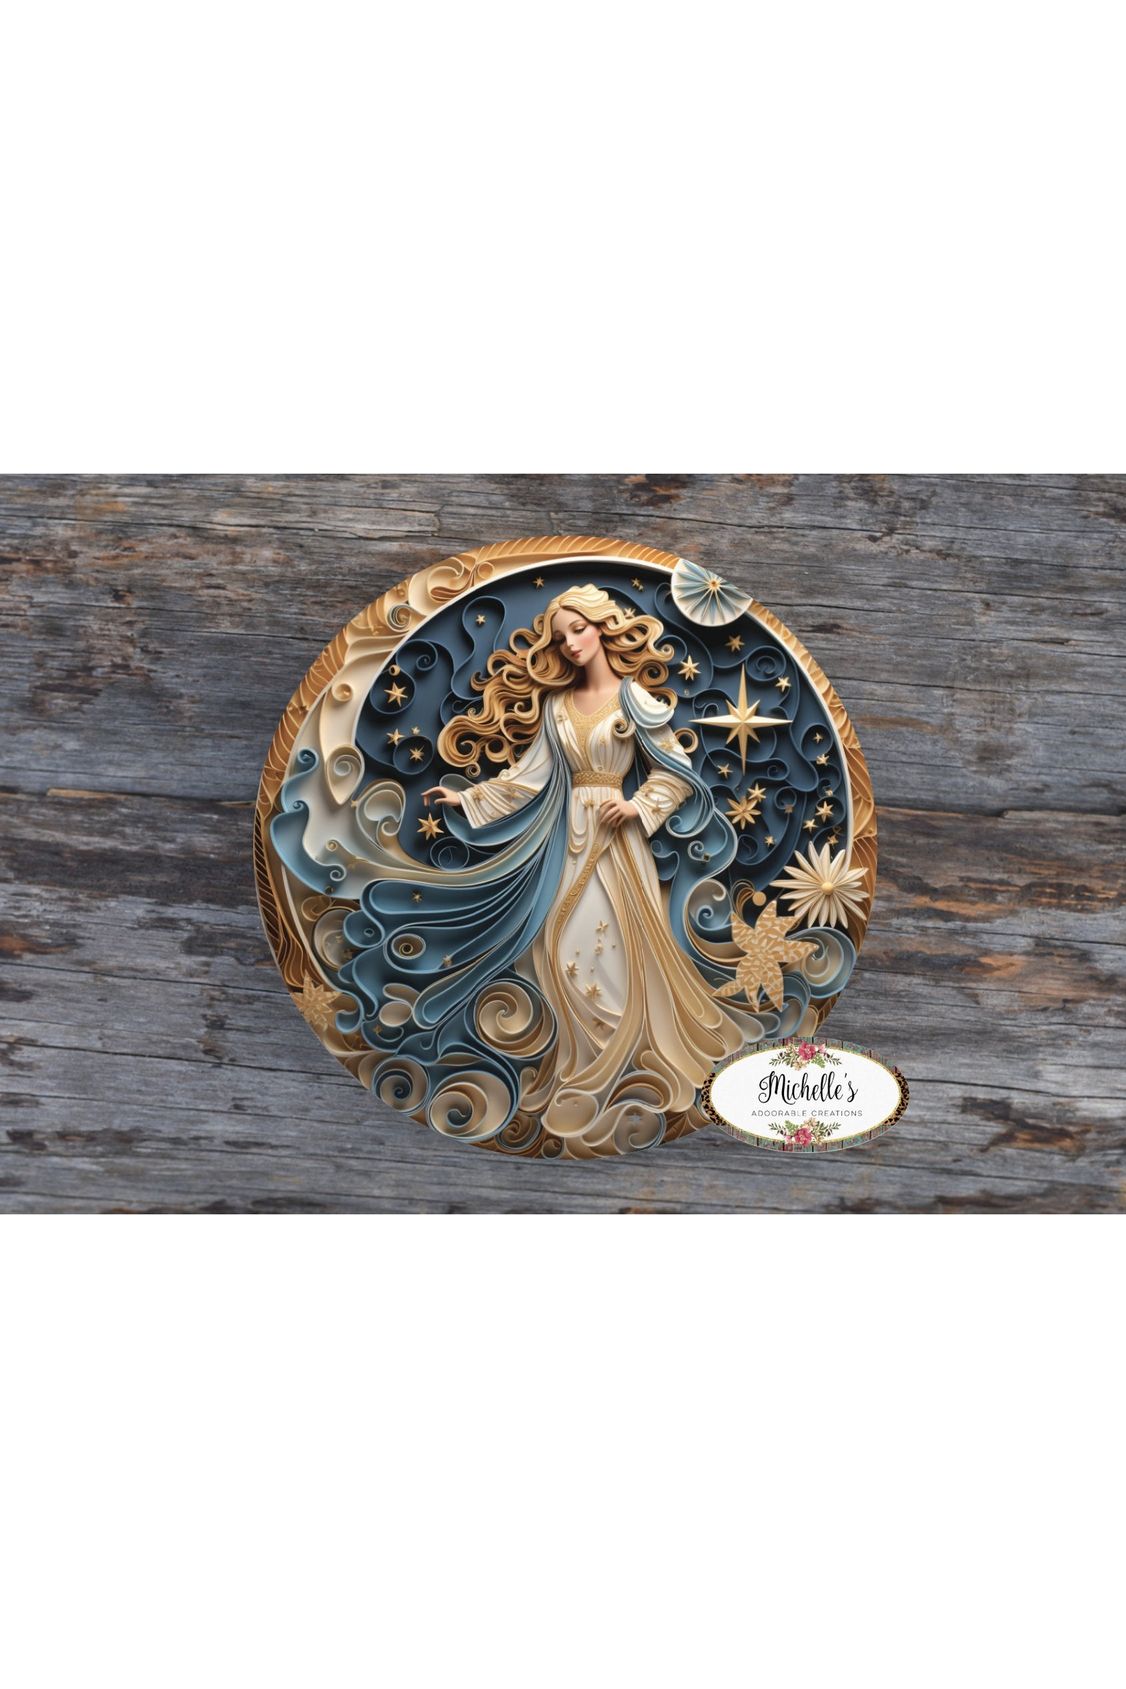 Shop For Faux 3D Gold Navy Christmas Angel Sign - Wreath Enhancement